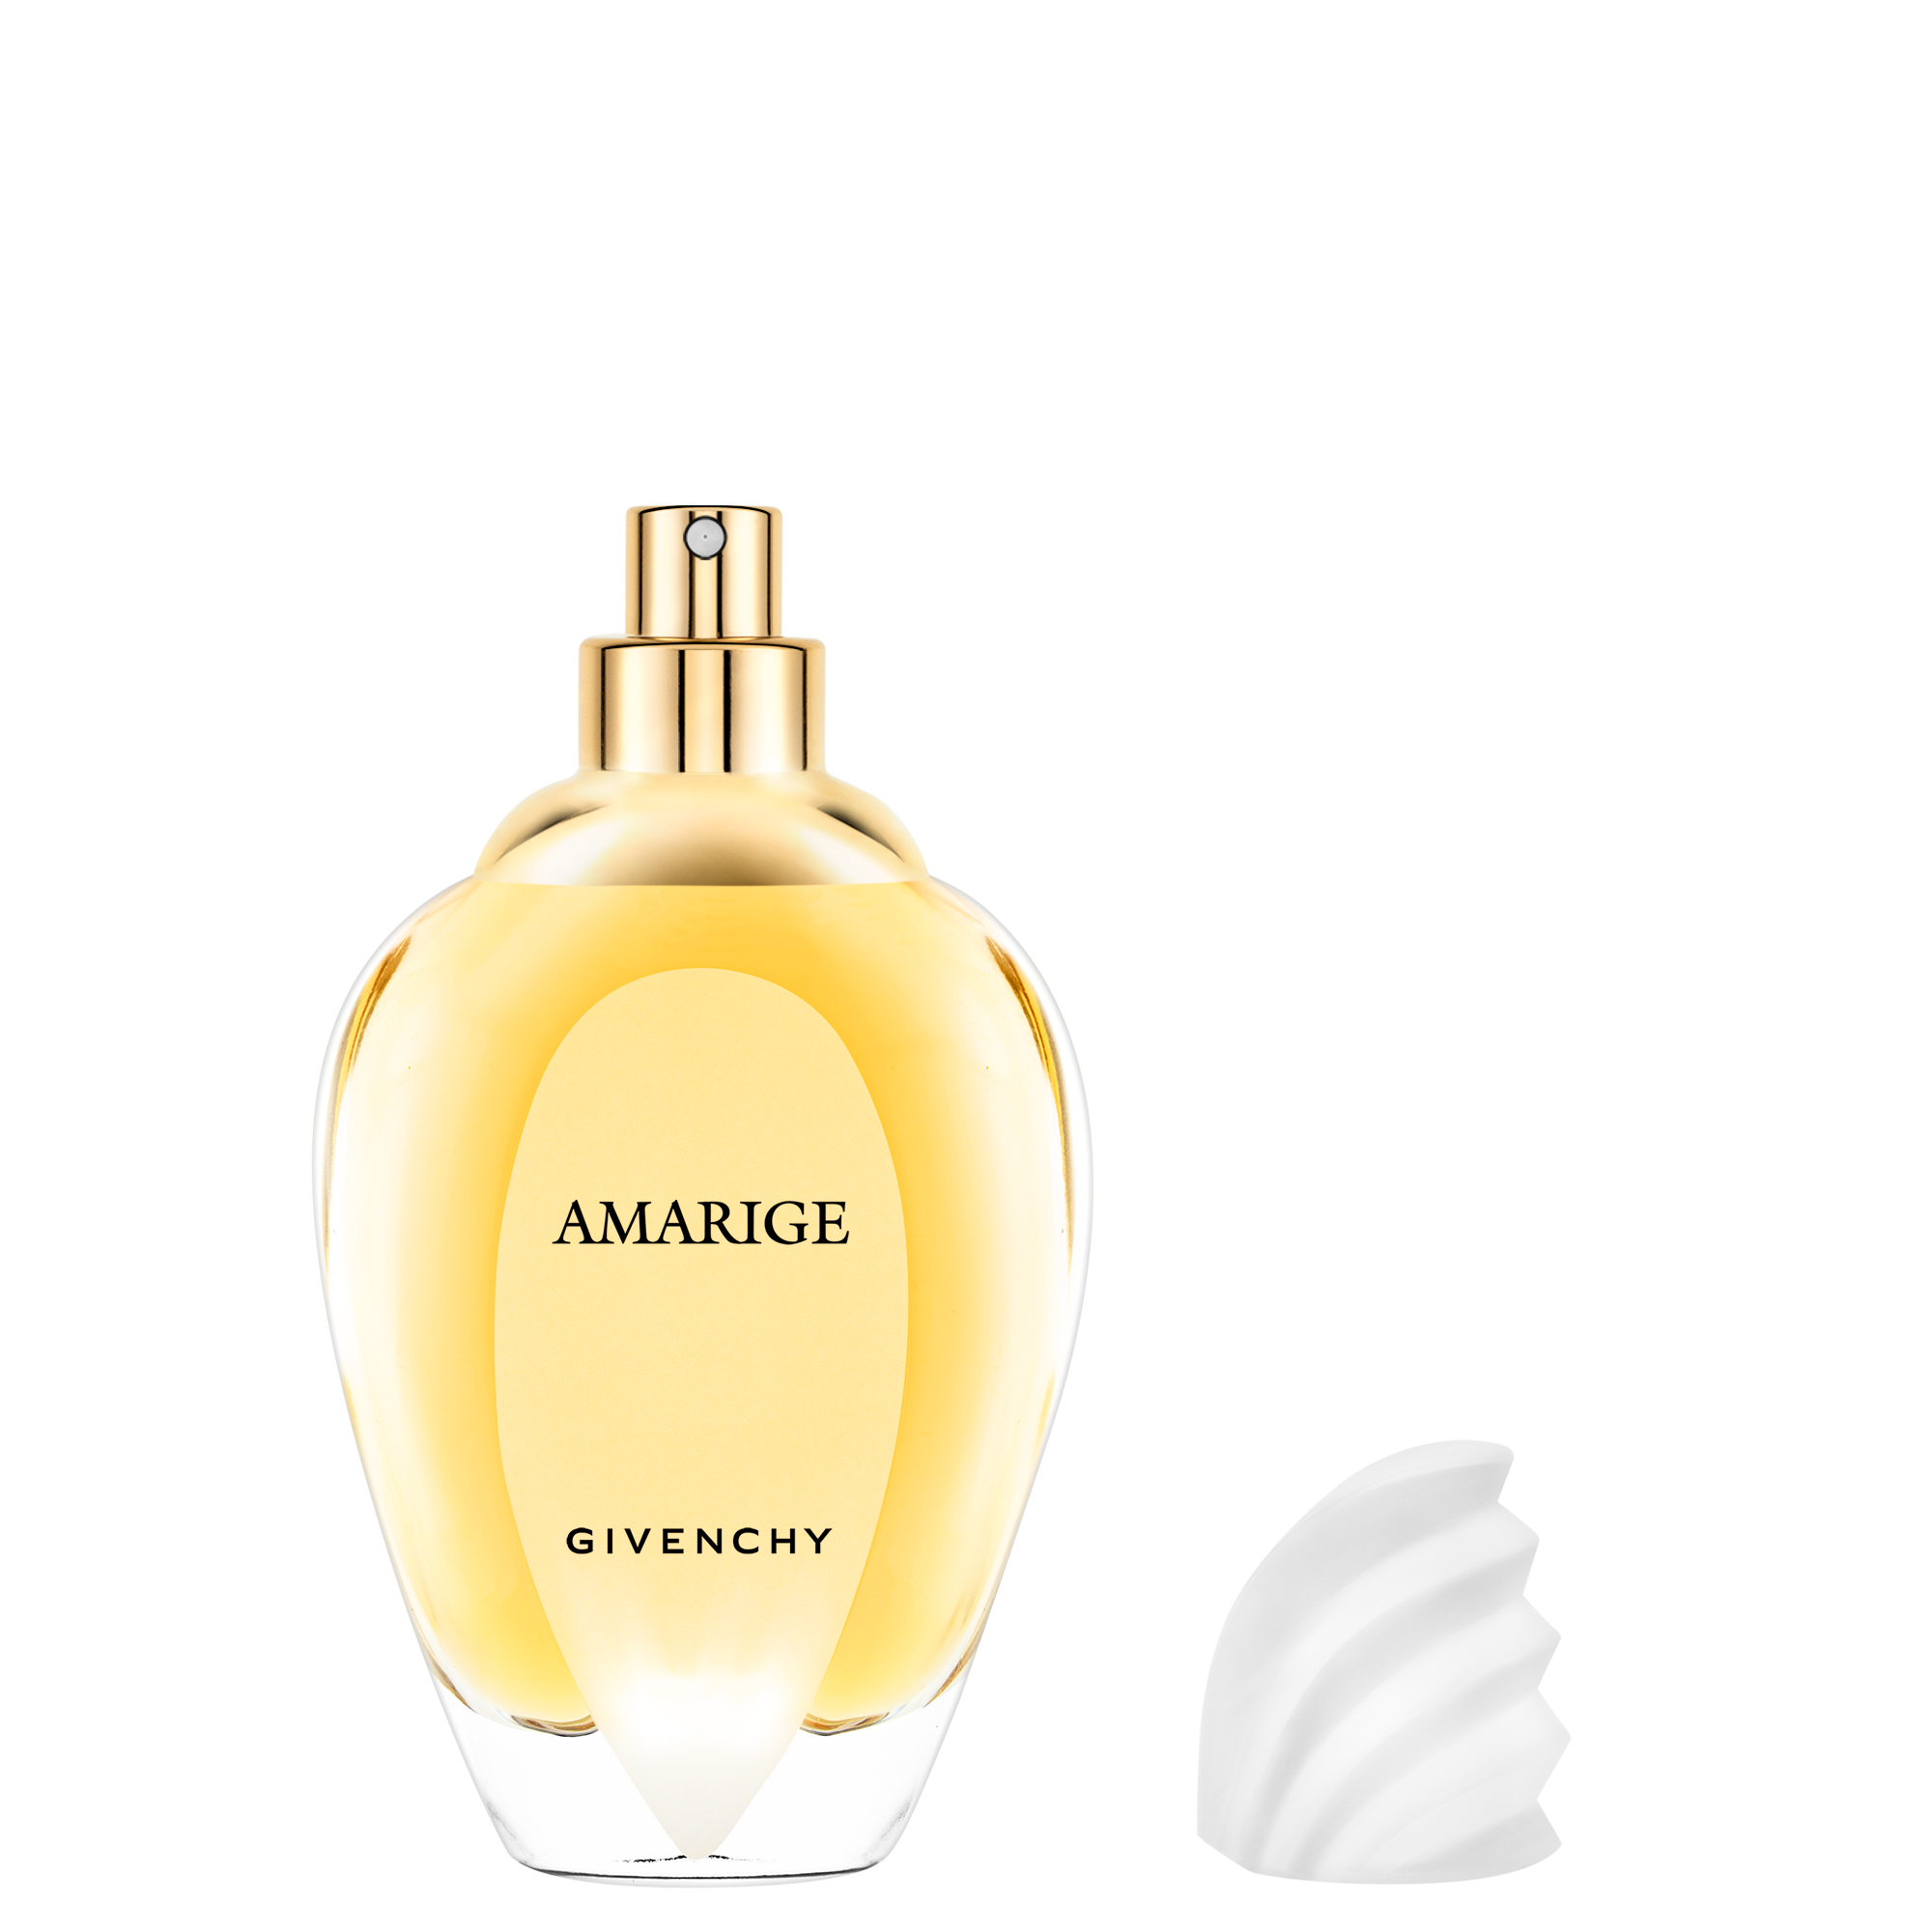 amarige perfume 30ml